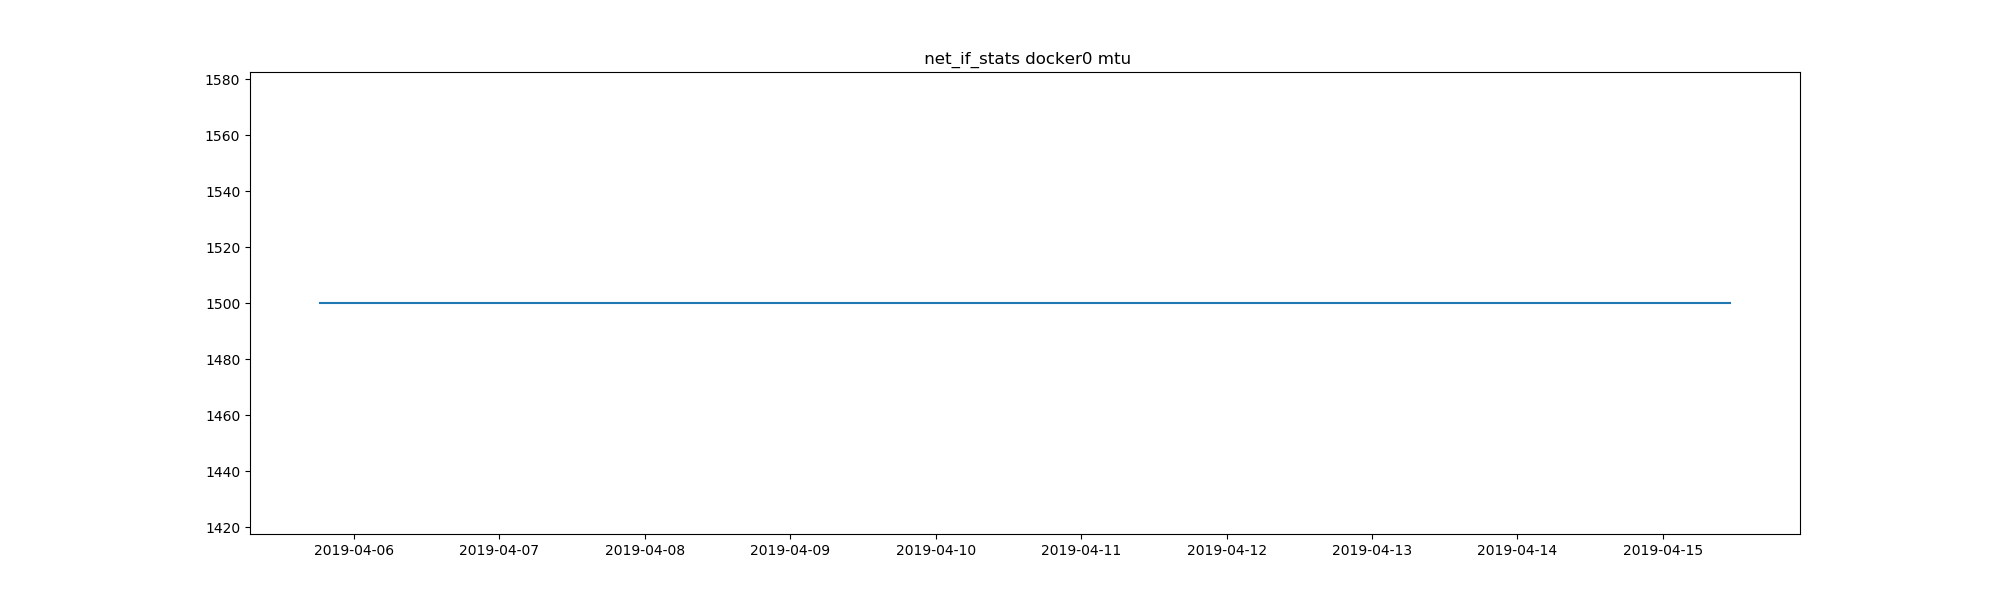 task-network-net_if_stats-tipbr0-enp0s31f6-docker0-isup-duplex-speed-mtu.png